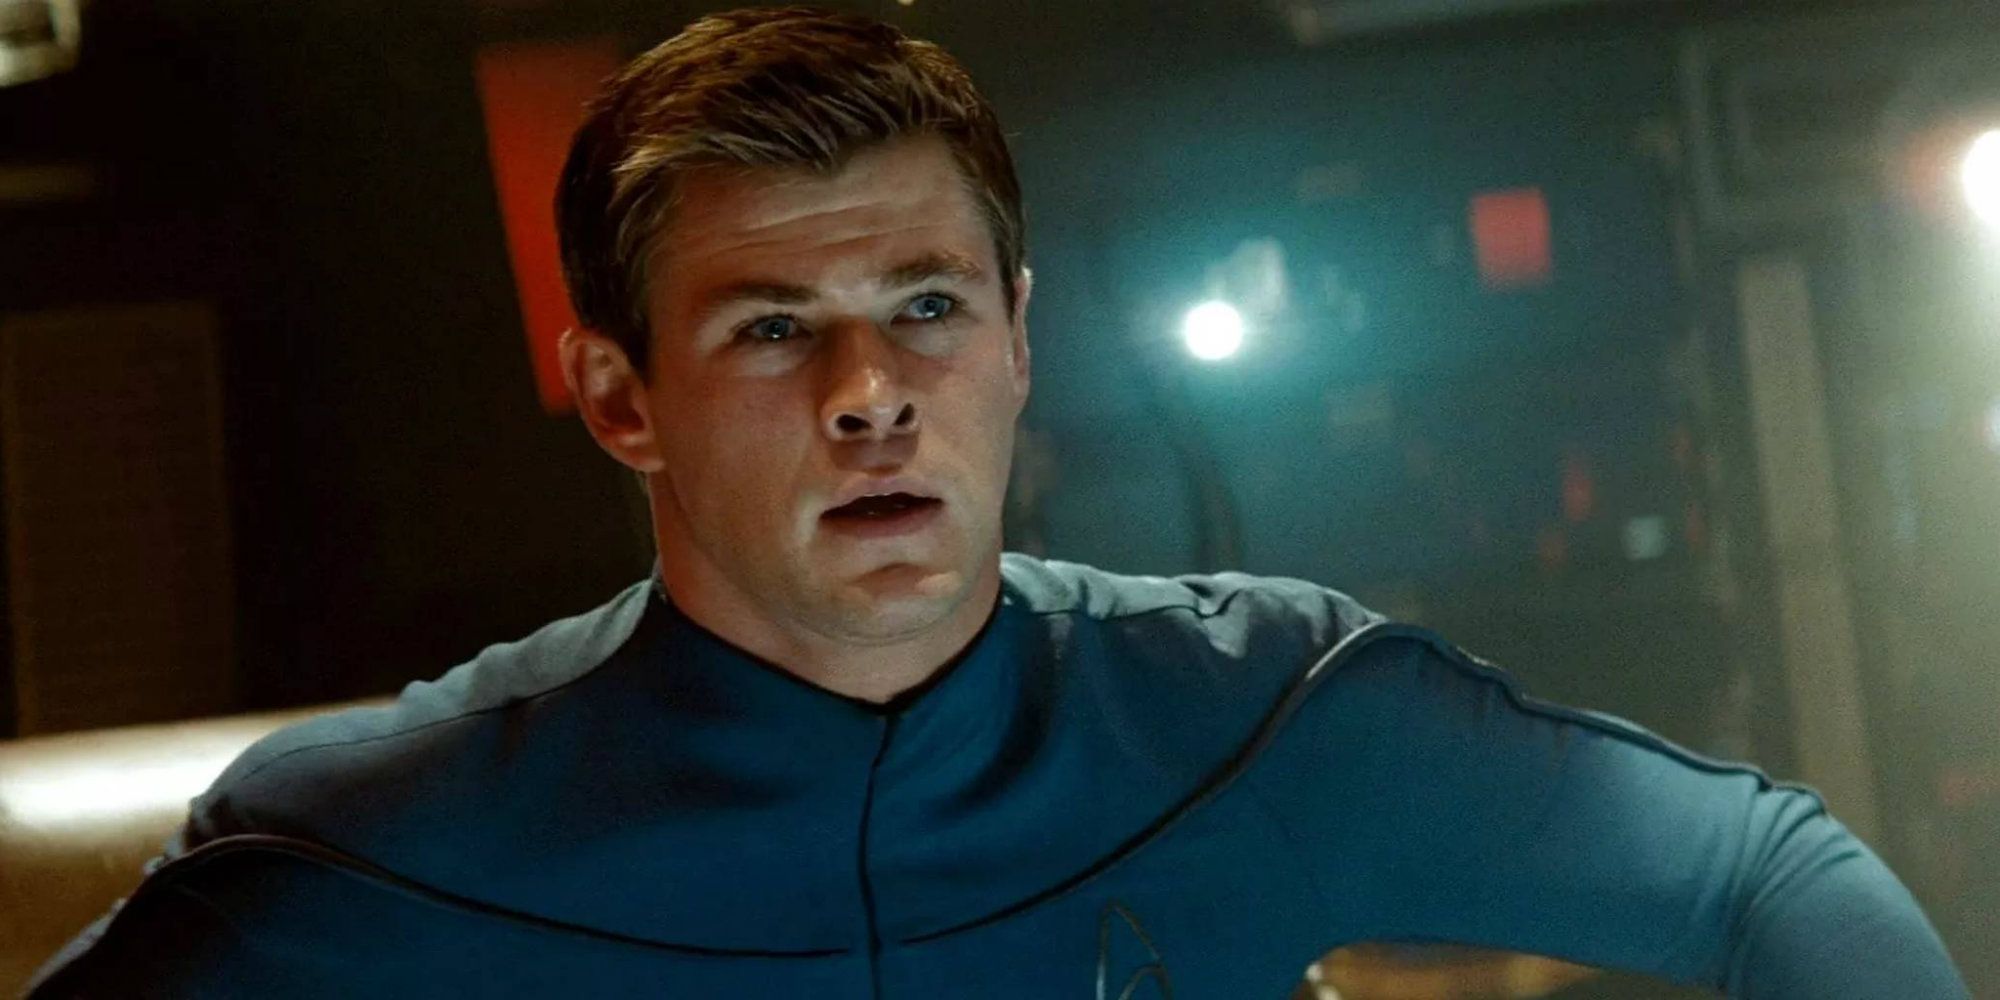 George Kirk aboard the Enterprise in Star Trek (2009)